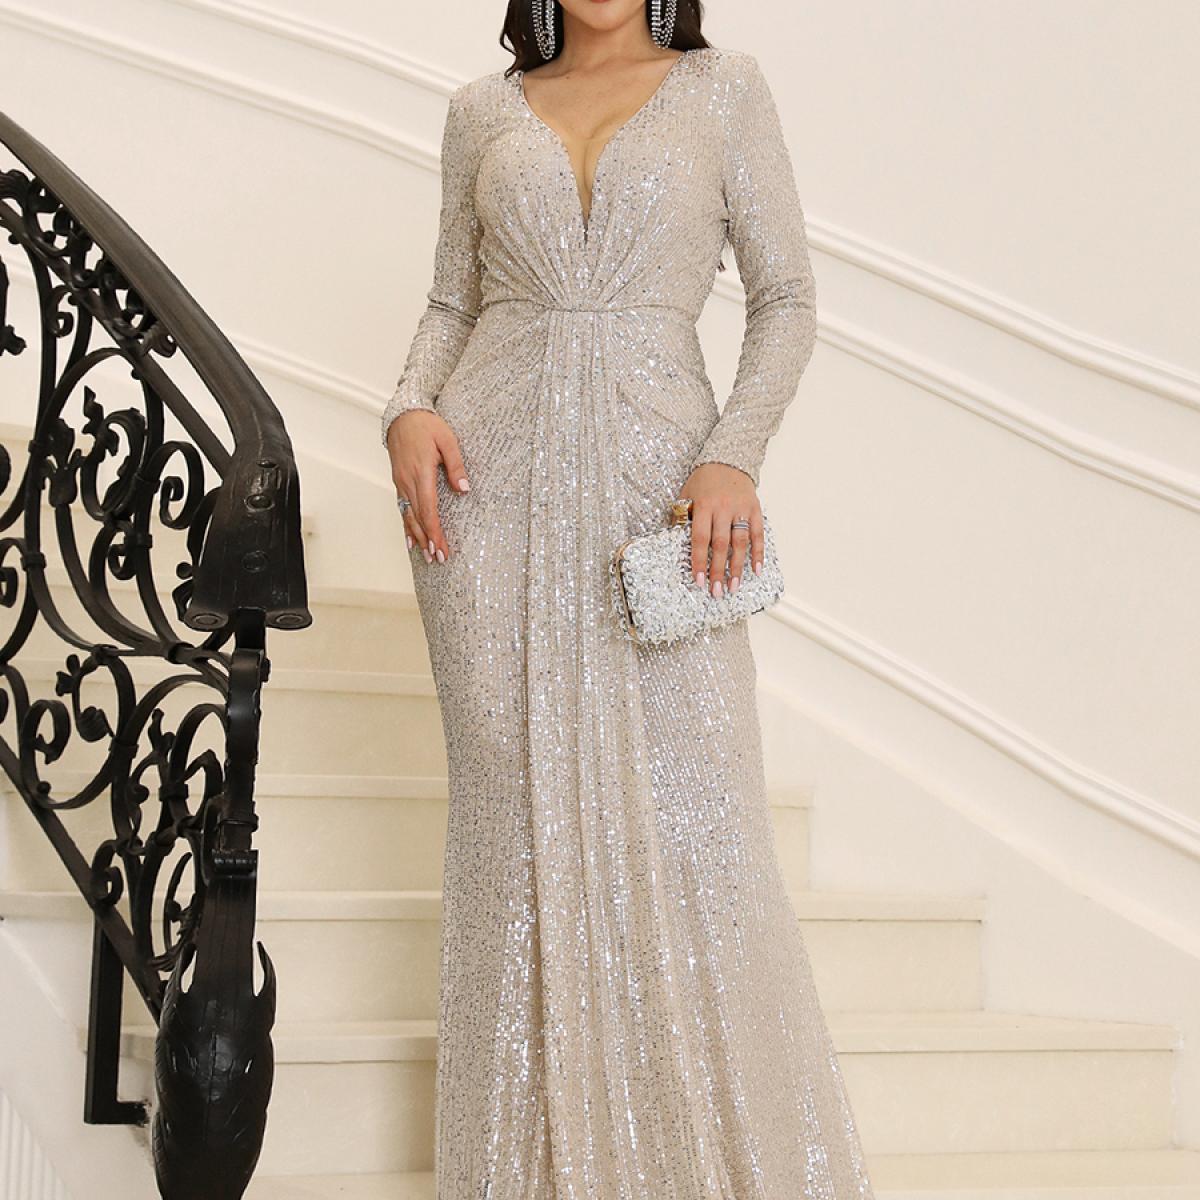 Missord Vneck Long Sleeve Backless Silver Sequins Prom Dress Wedding Party Elegant Women's Formal Dress Shining Evening 